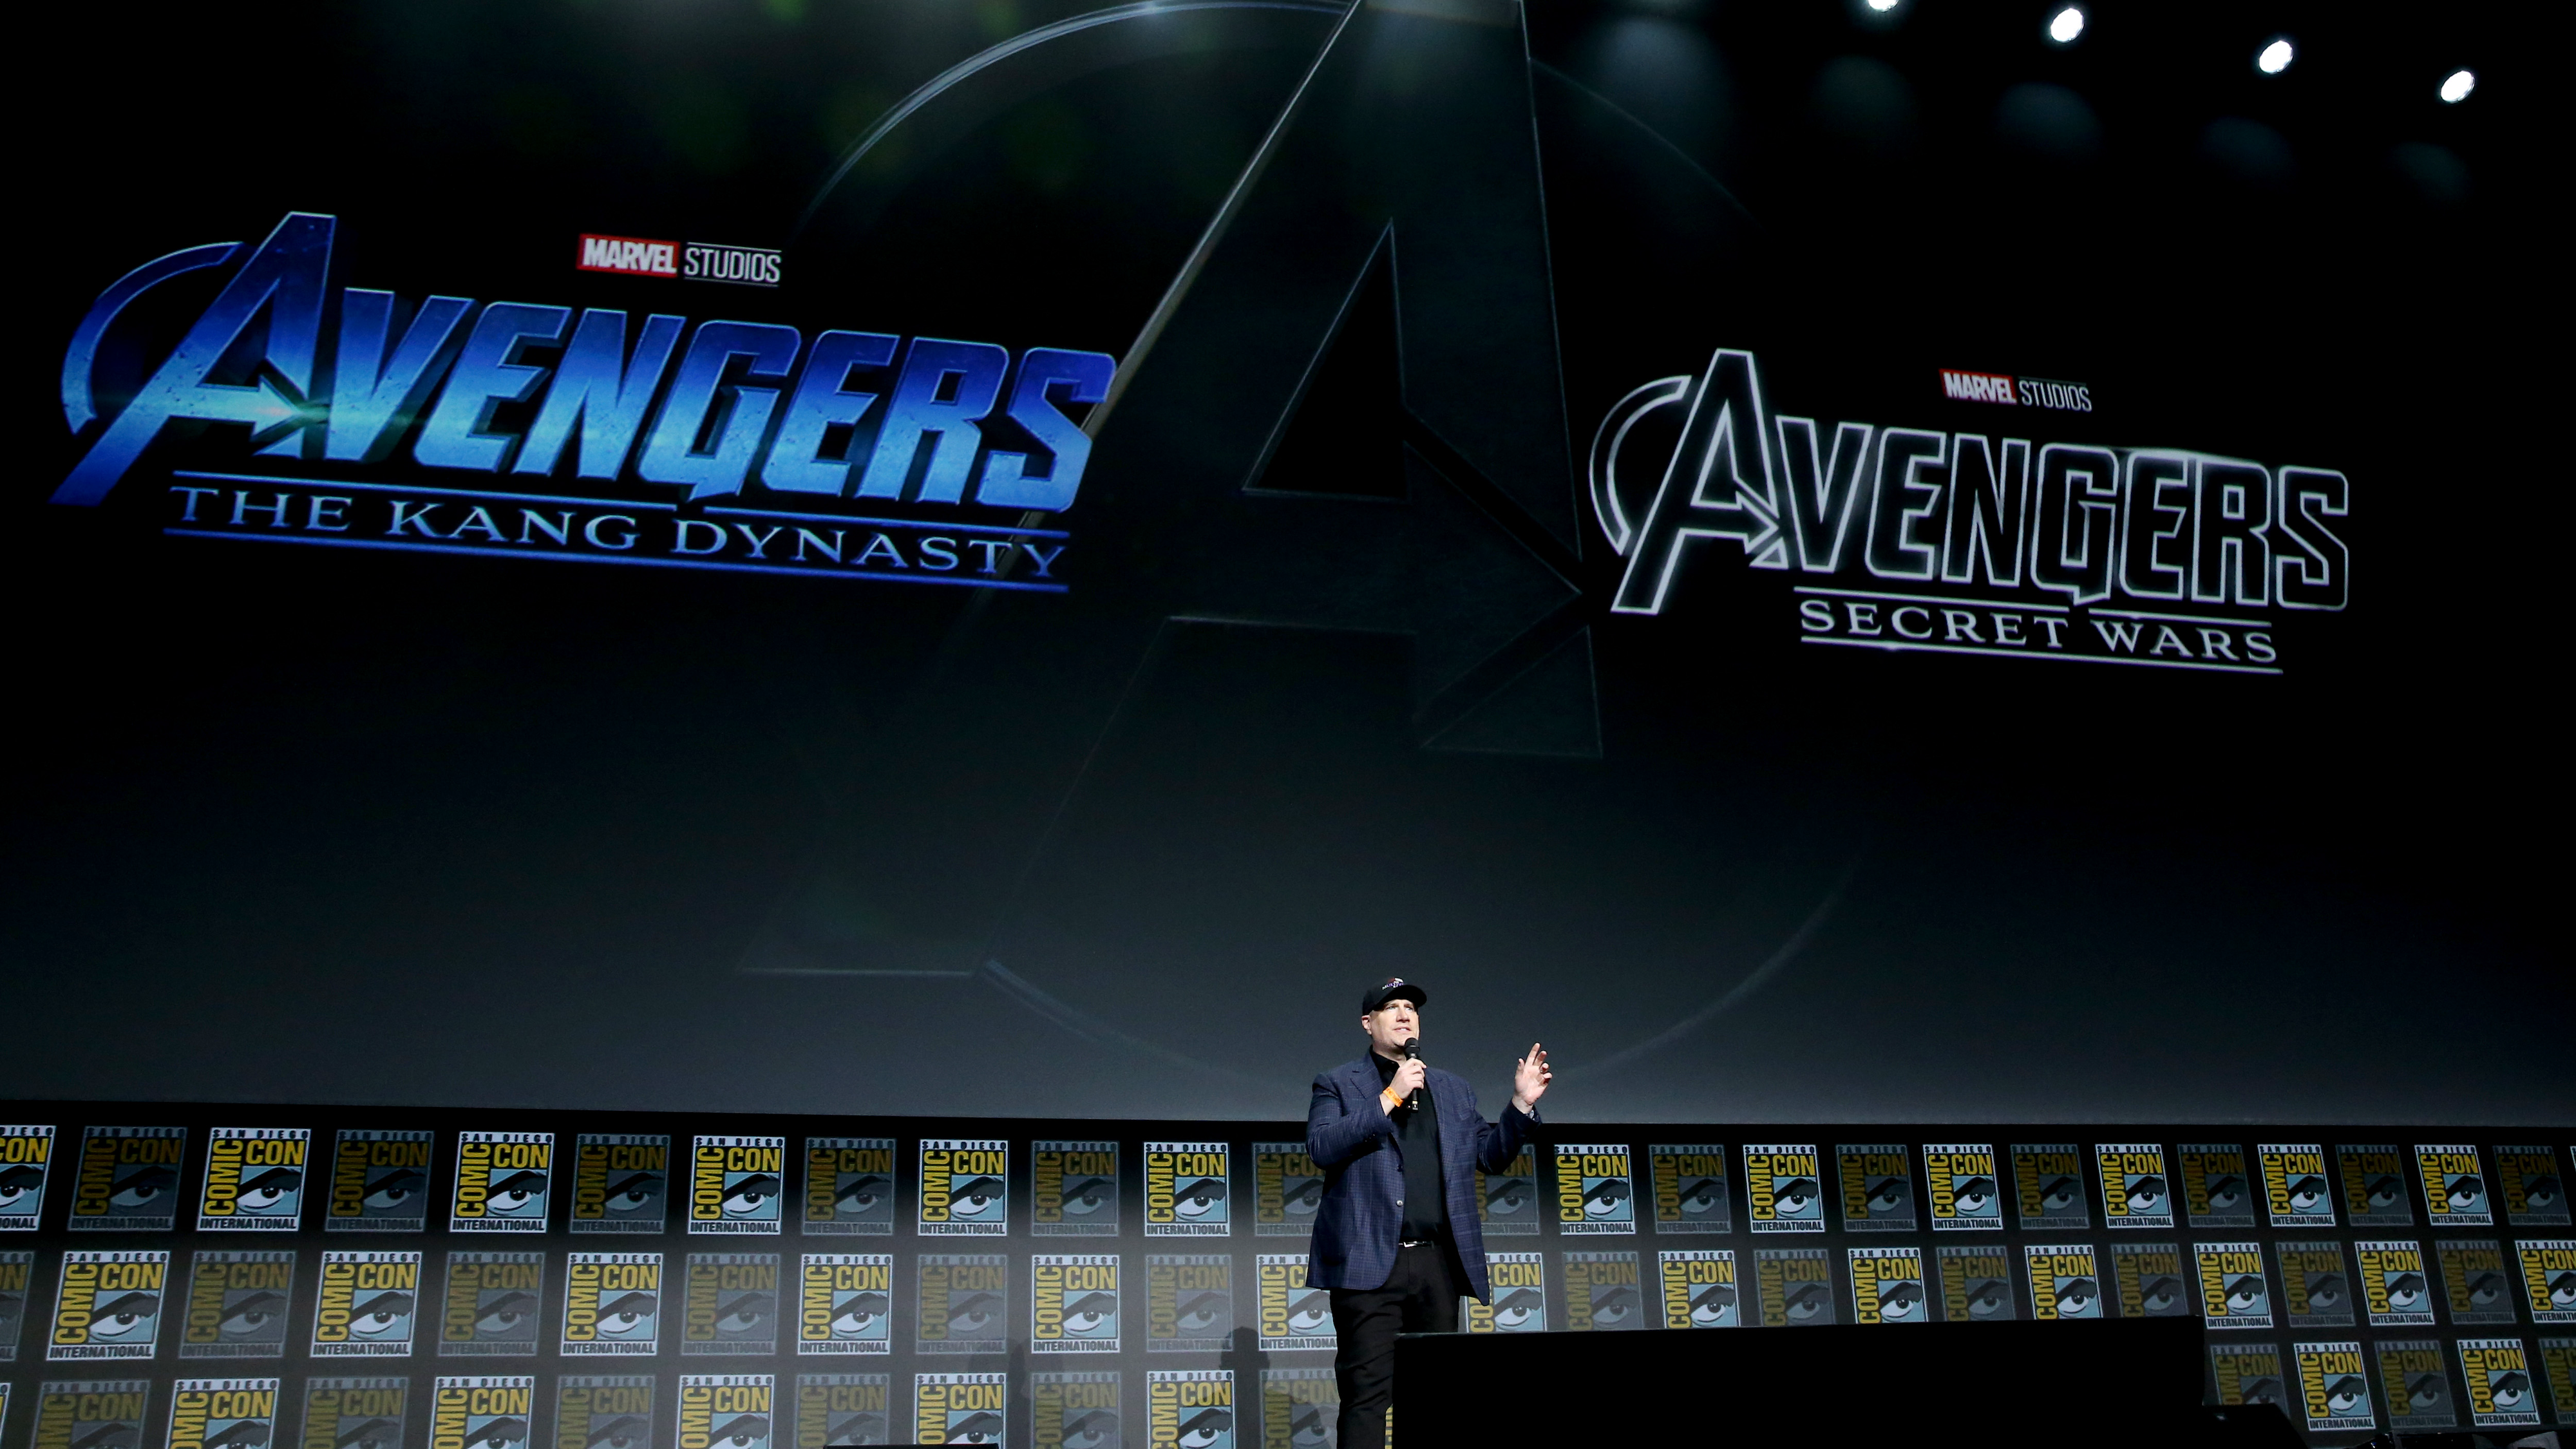 Avengers: The Kang Dynasty Loses Director Destin Daniel Cretton